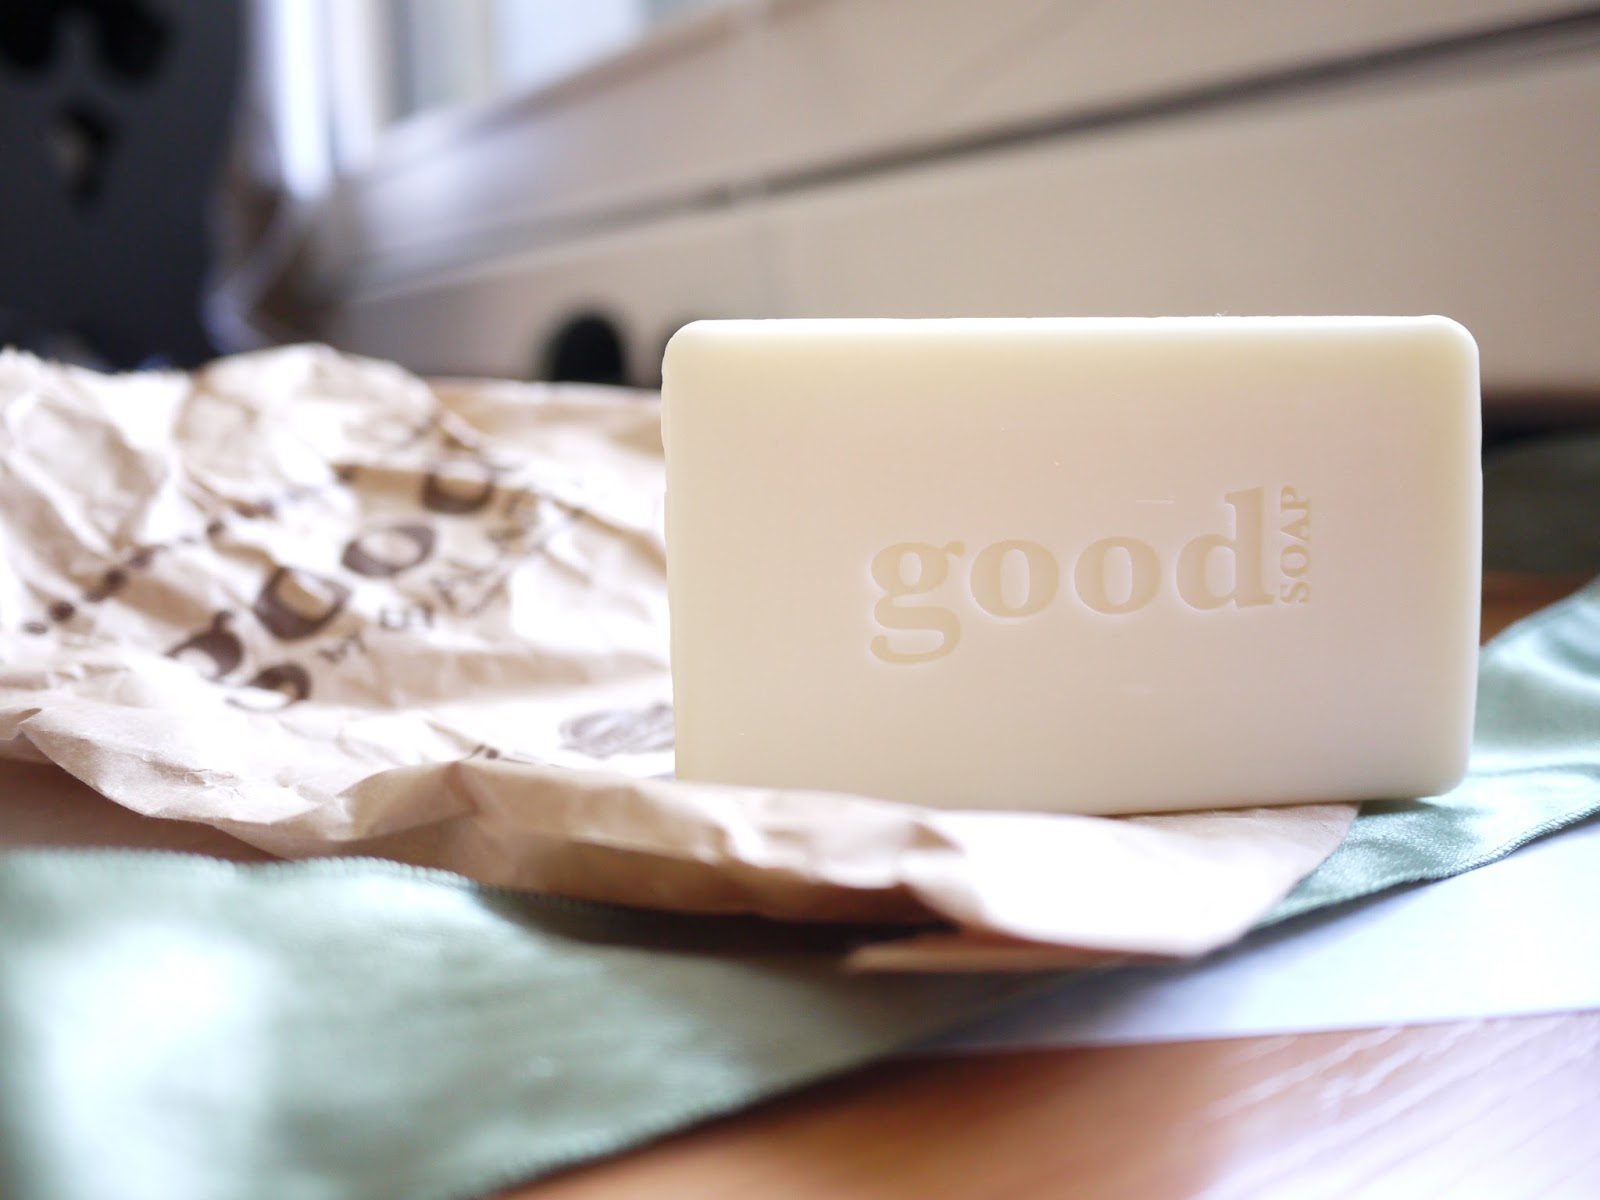 Good Soap by Alaffia vanilla coconut mint soap review